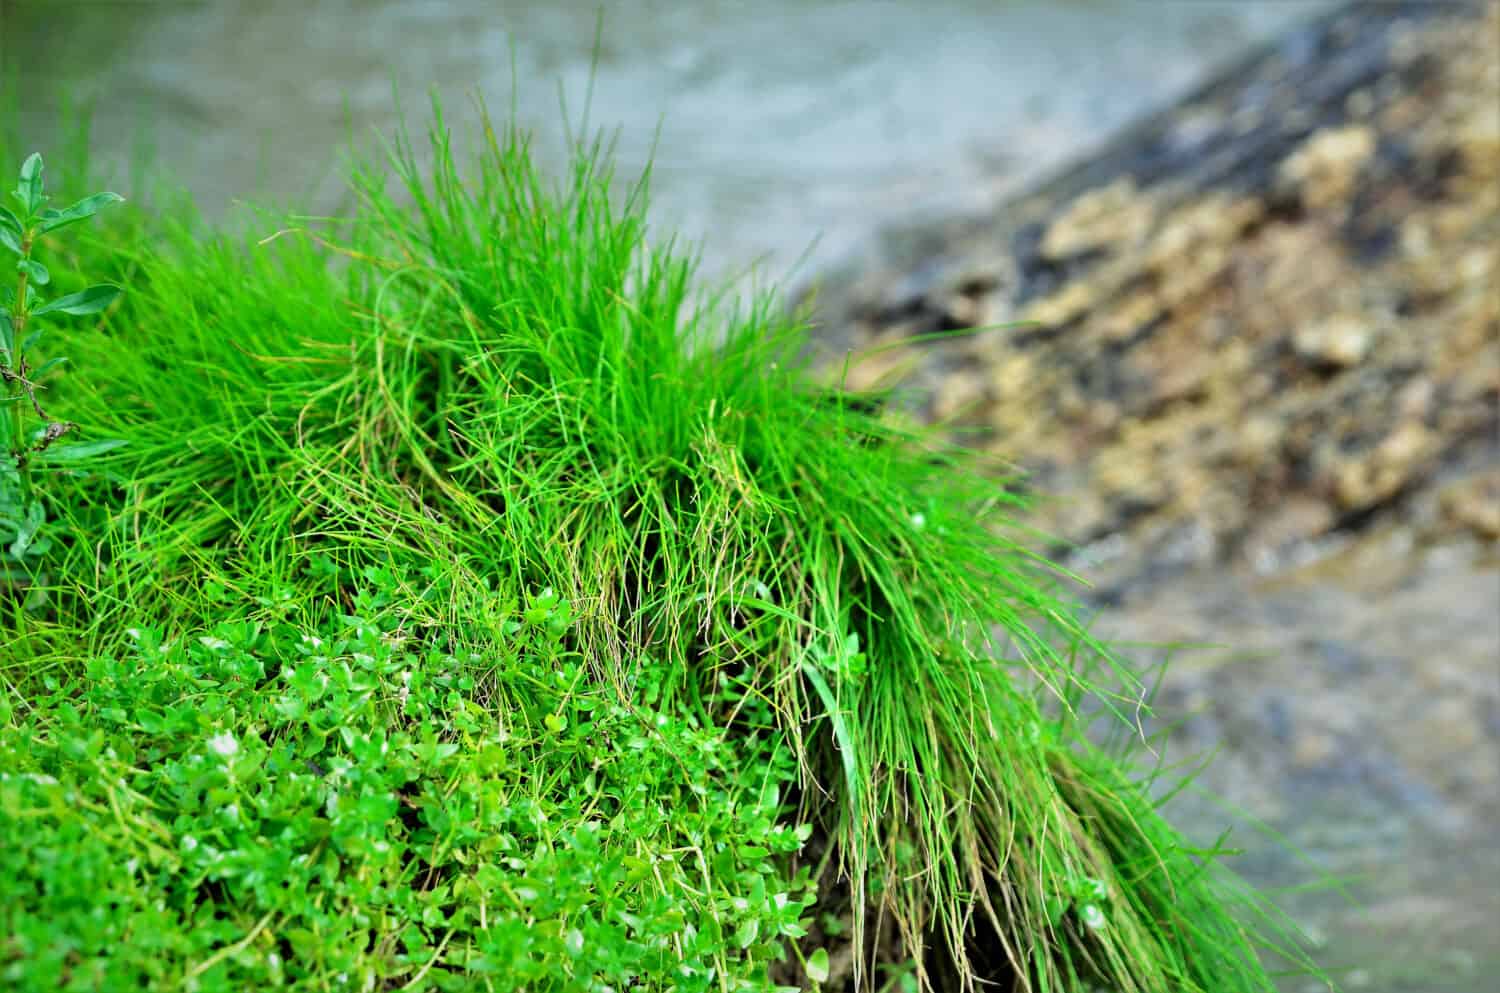 The banks of the Jaguari river, Zoysia tenuifolia grass